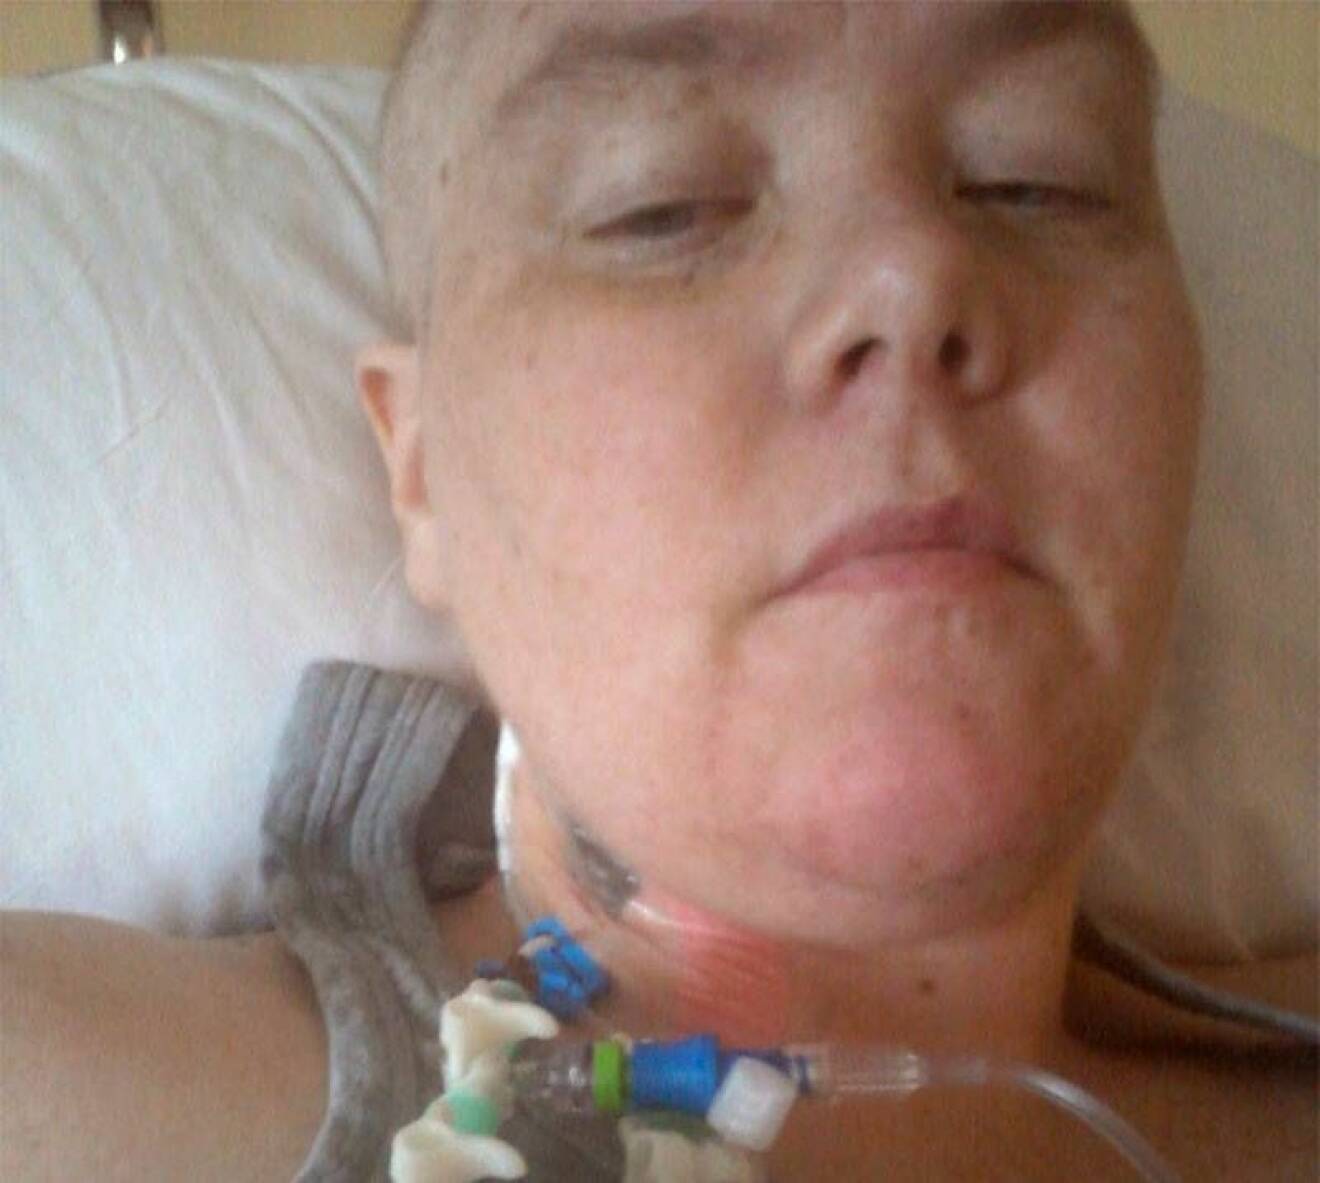 Jessica Bergs genomgick en stamcellstransplantation 2012